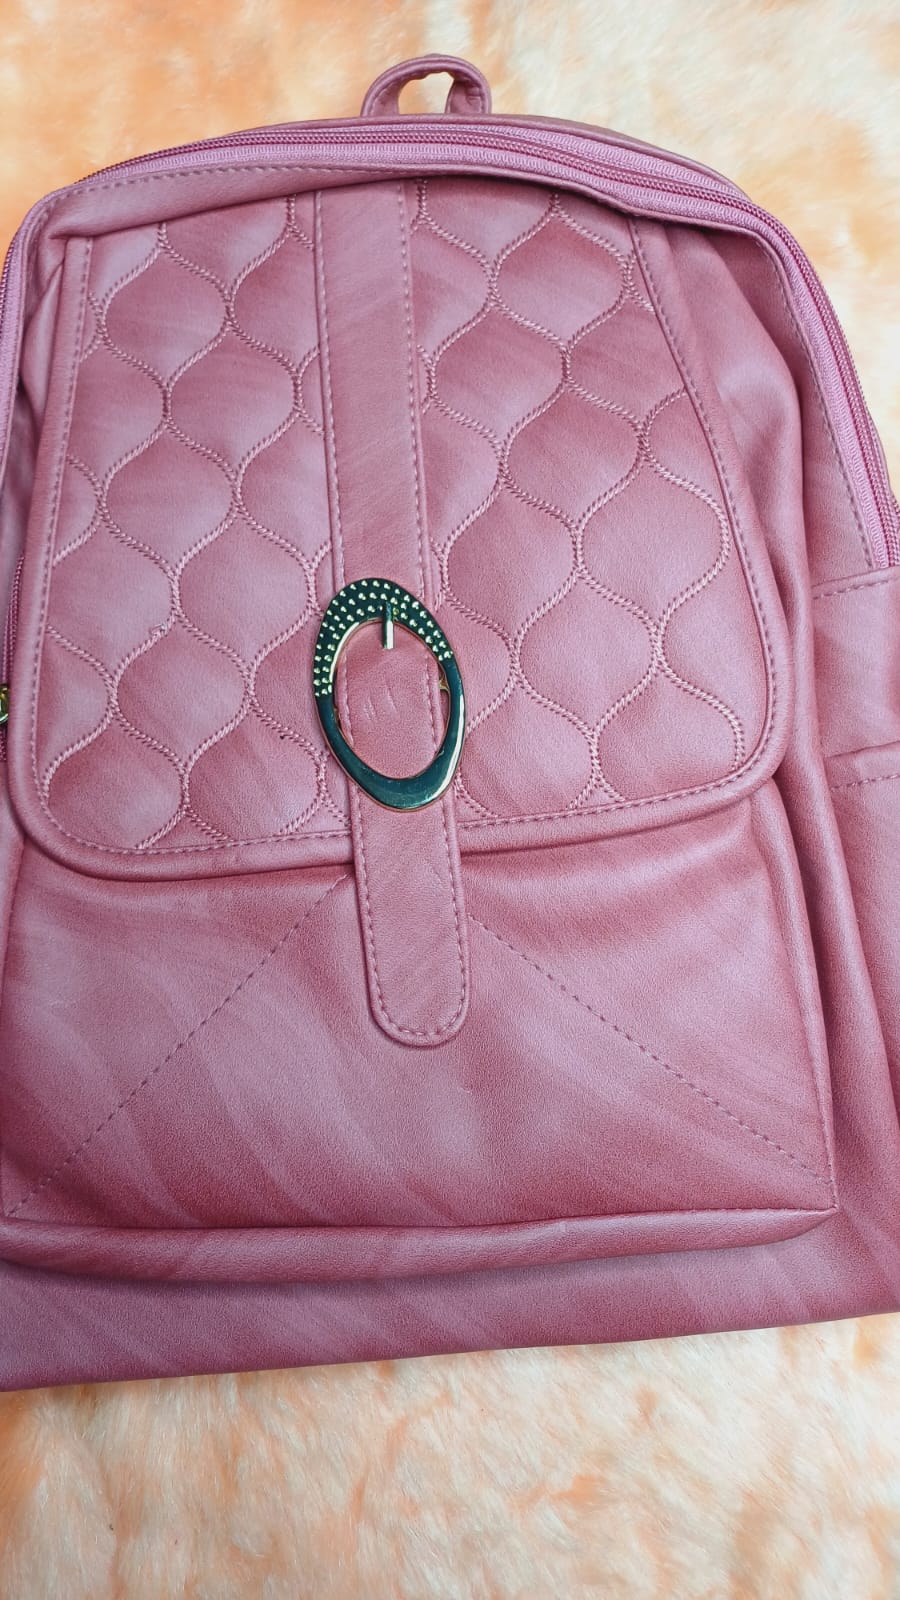 PU Leather Stylish School Bag for Girls 10 L Backpack (Black)